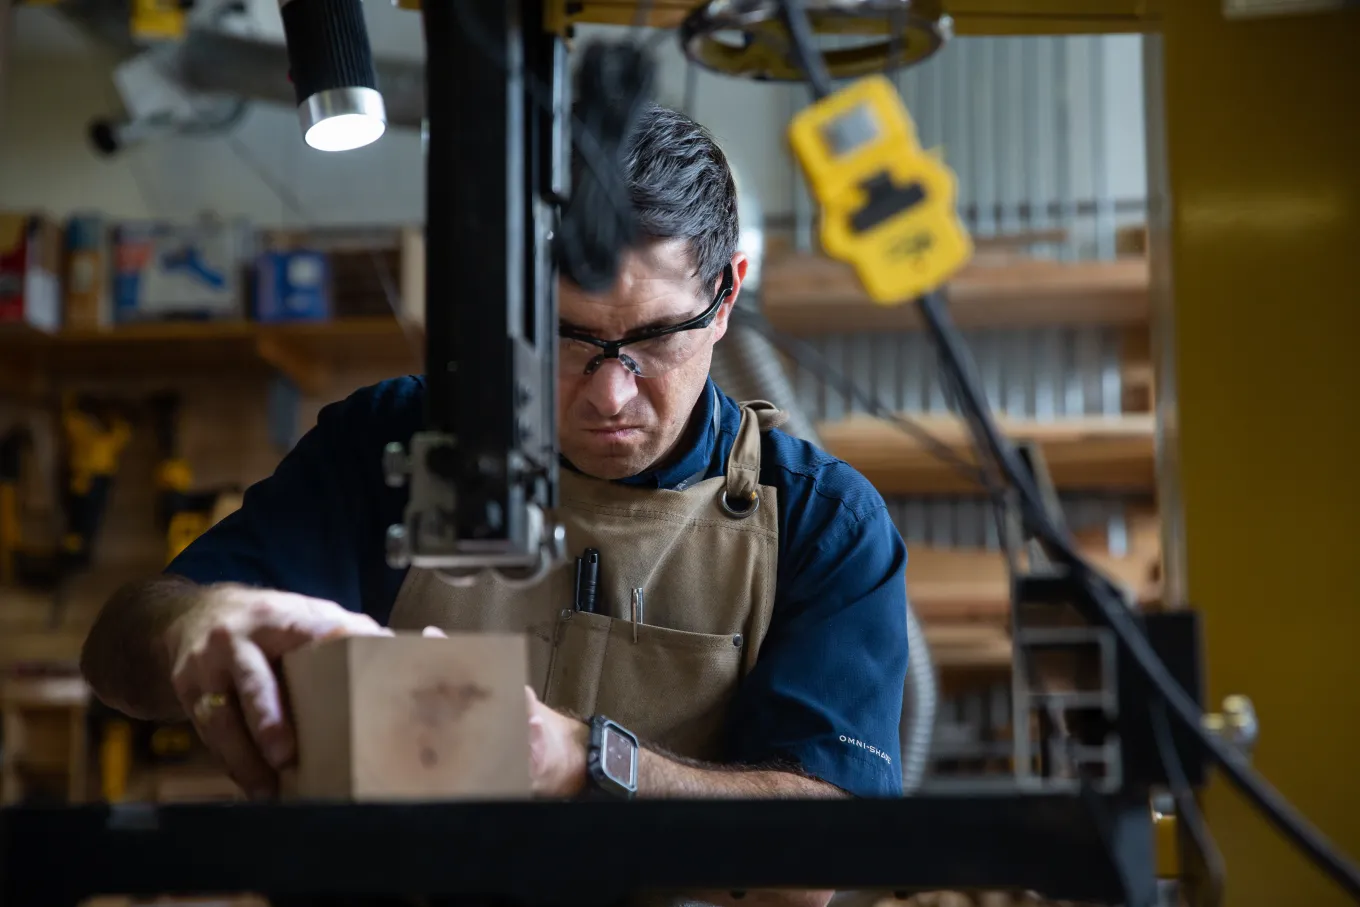 Male staff member cuts wood in Fabrication Studio